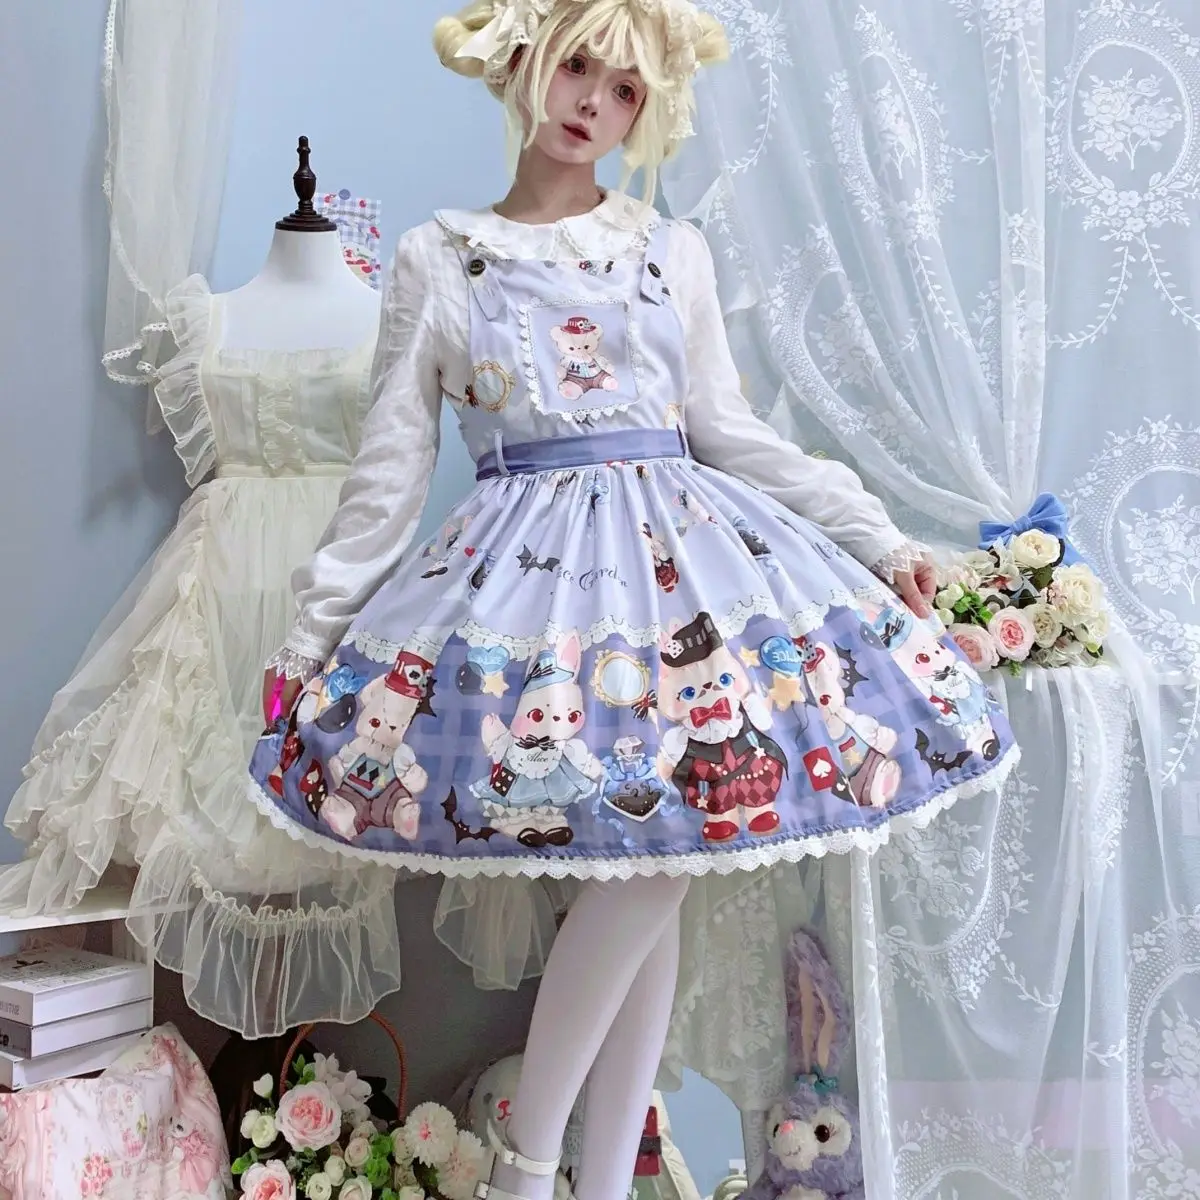 Giapponese Soft Girl Kawaii Lolita Jsk Dress Sweet Bunny Print abiti carini Women Party Summer Princess bretelle Dress